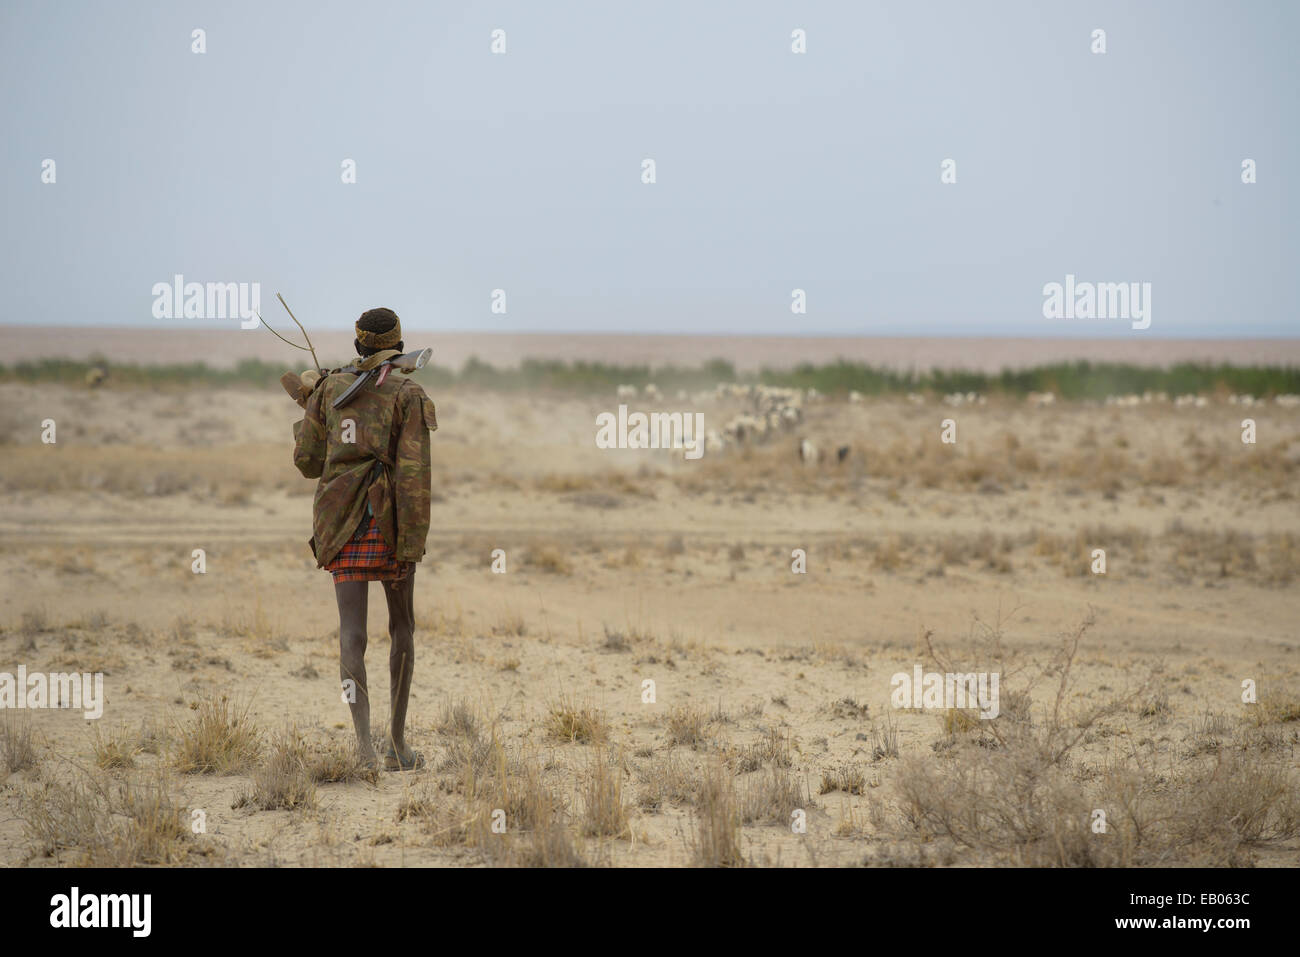 Turkana warrior in the desert, Kenya Stock Photo